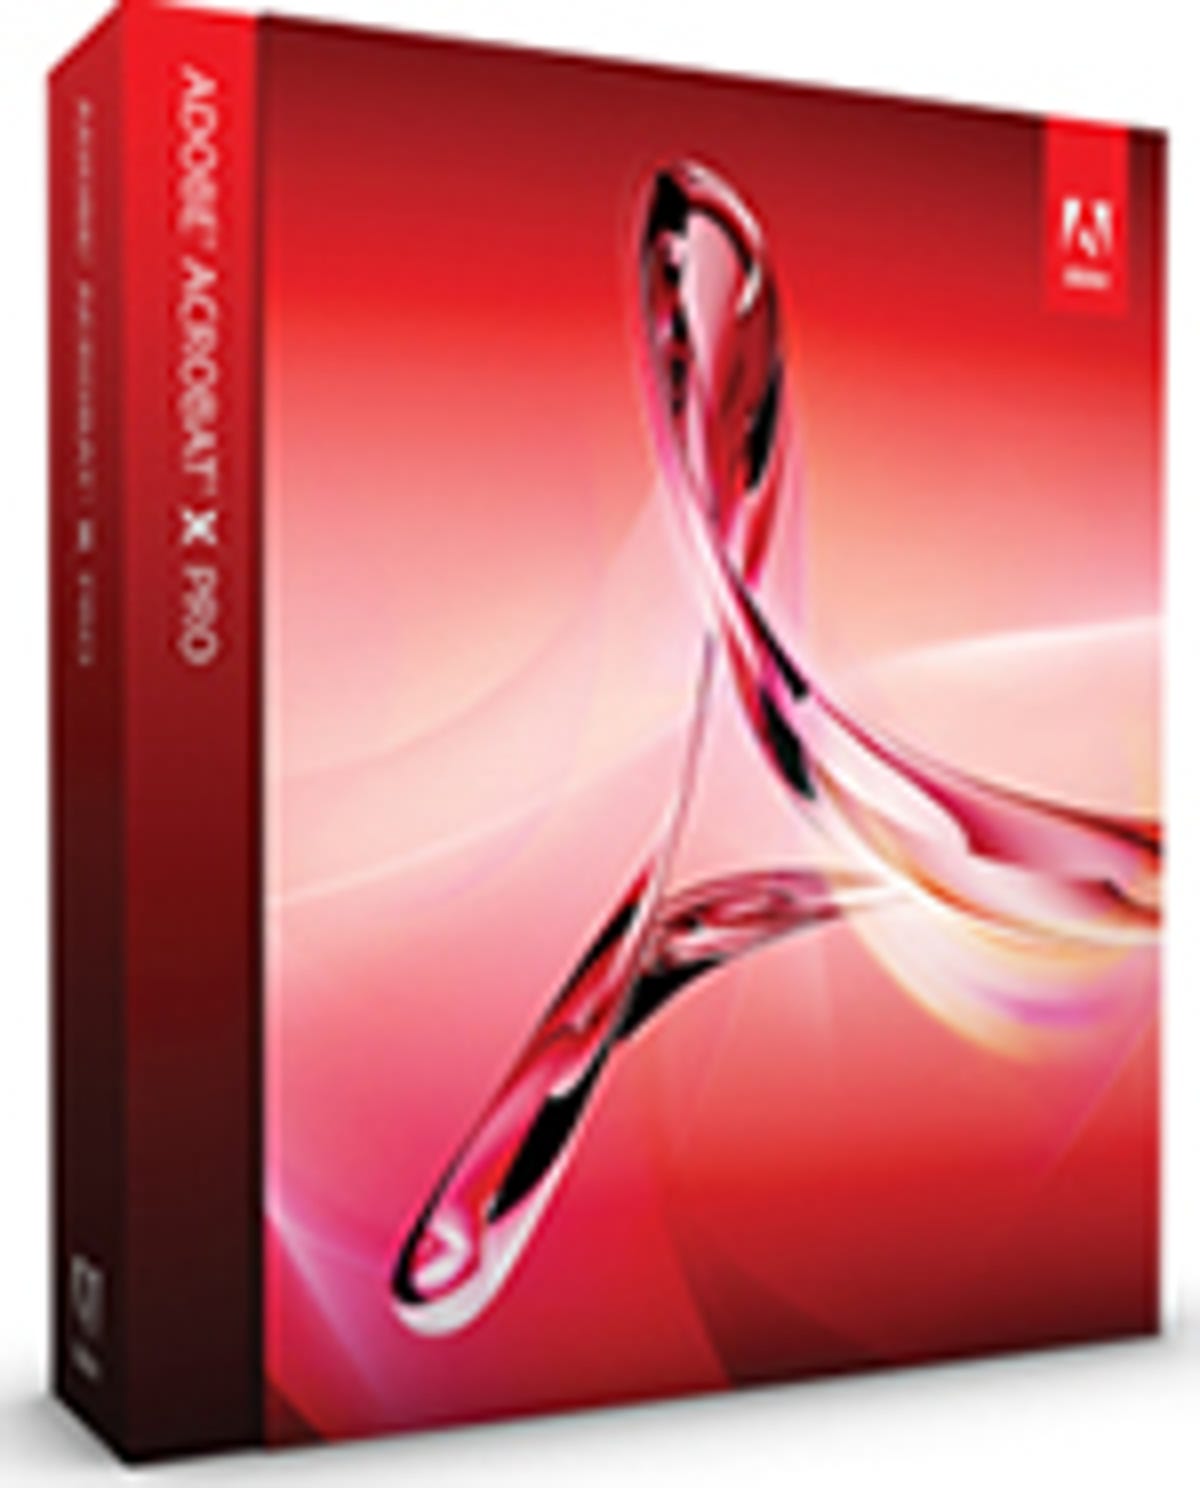 Adobe's new Acrobat X Pro